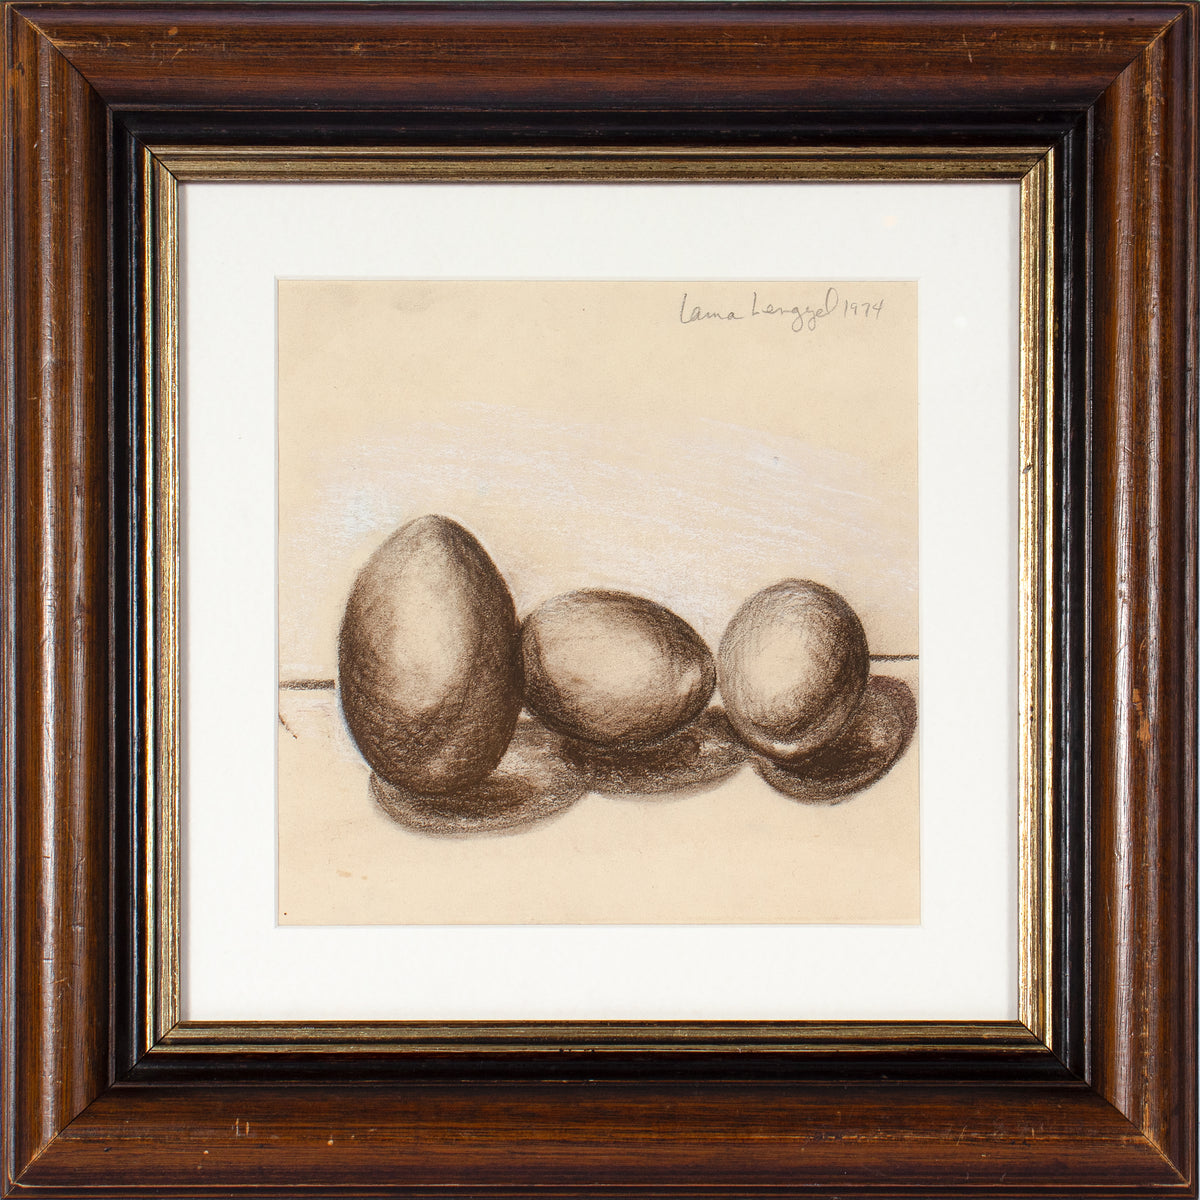 Three Eggs in a Row &lt;br&gt;1974 Pastel &lt;br&gt;&lt;br&gt;#58386